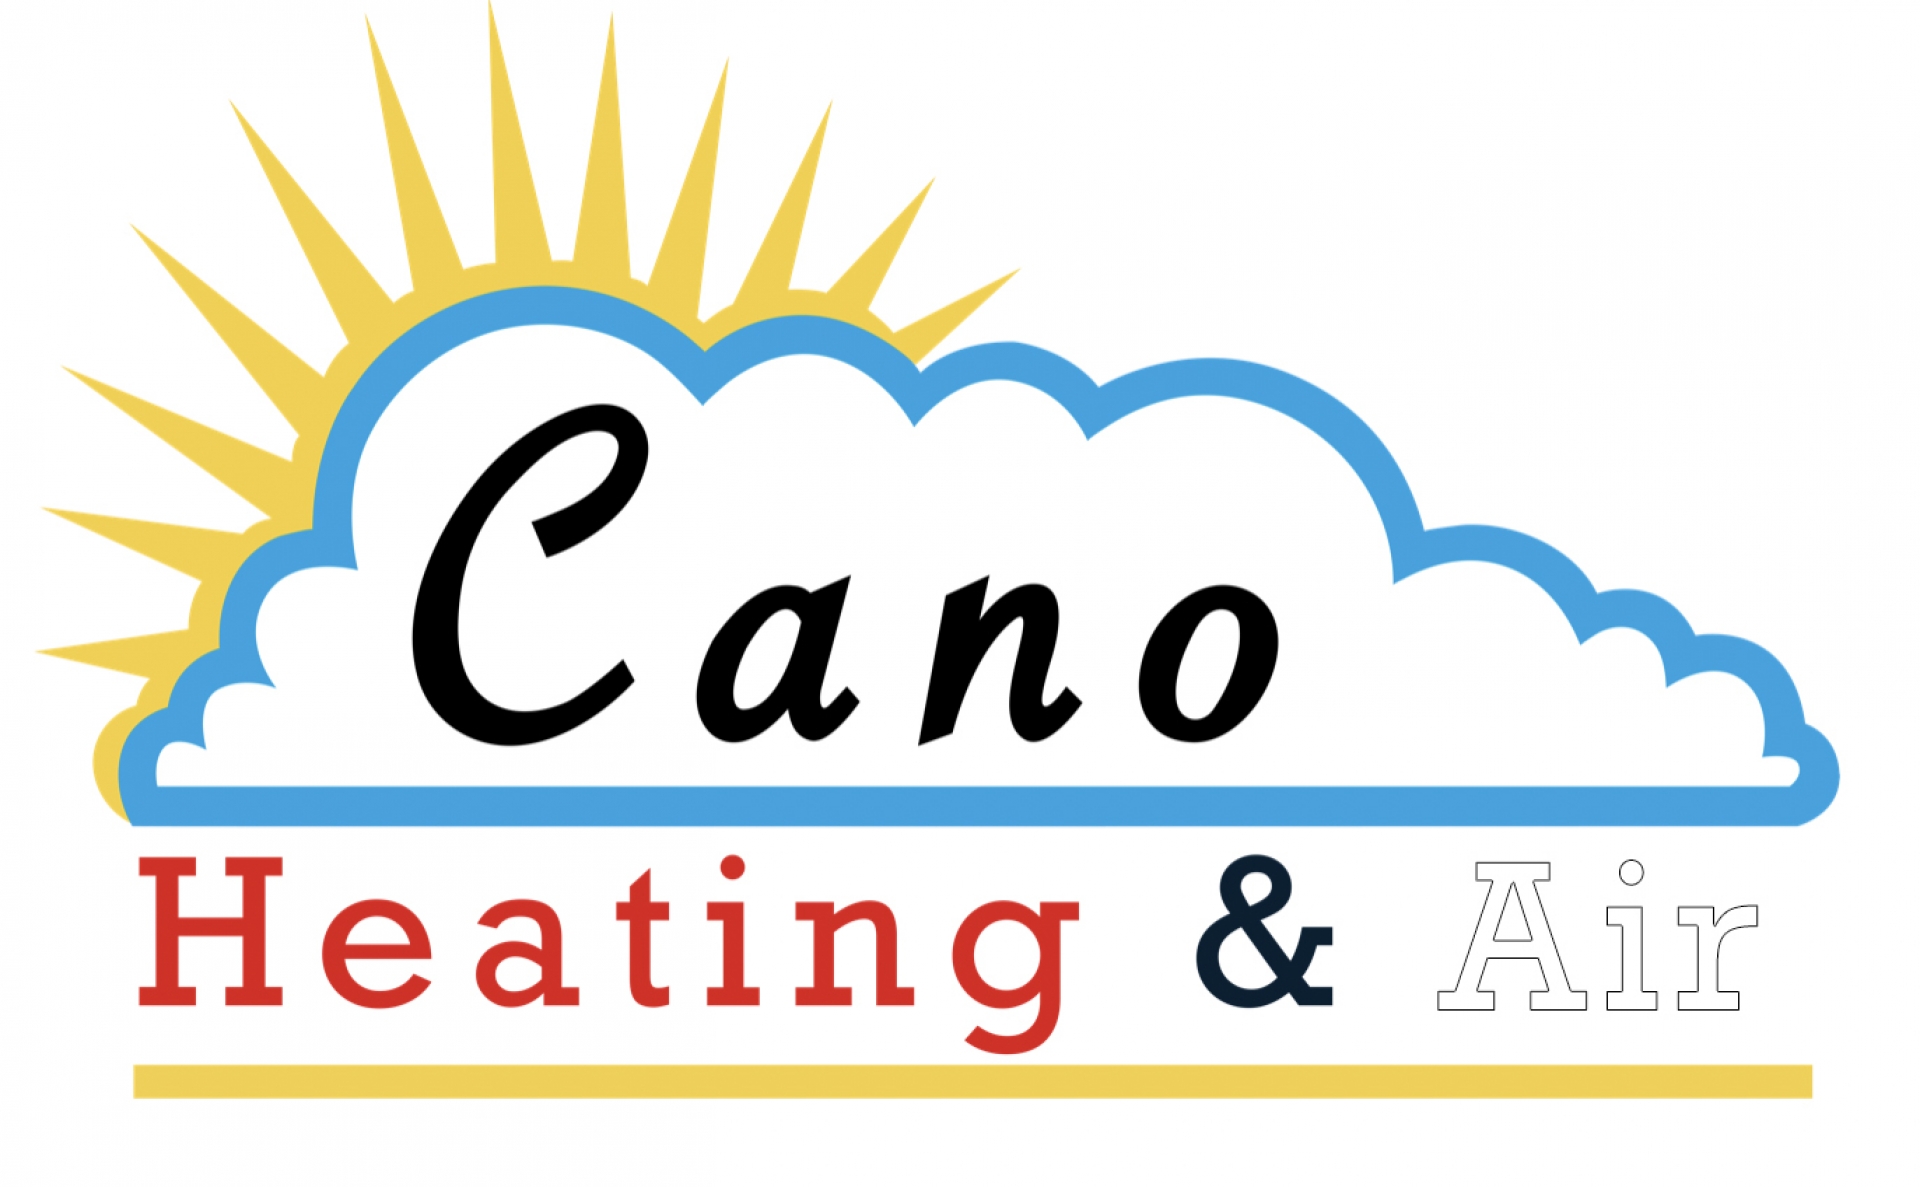 Cano Heating & Air Conditioning company logo